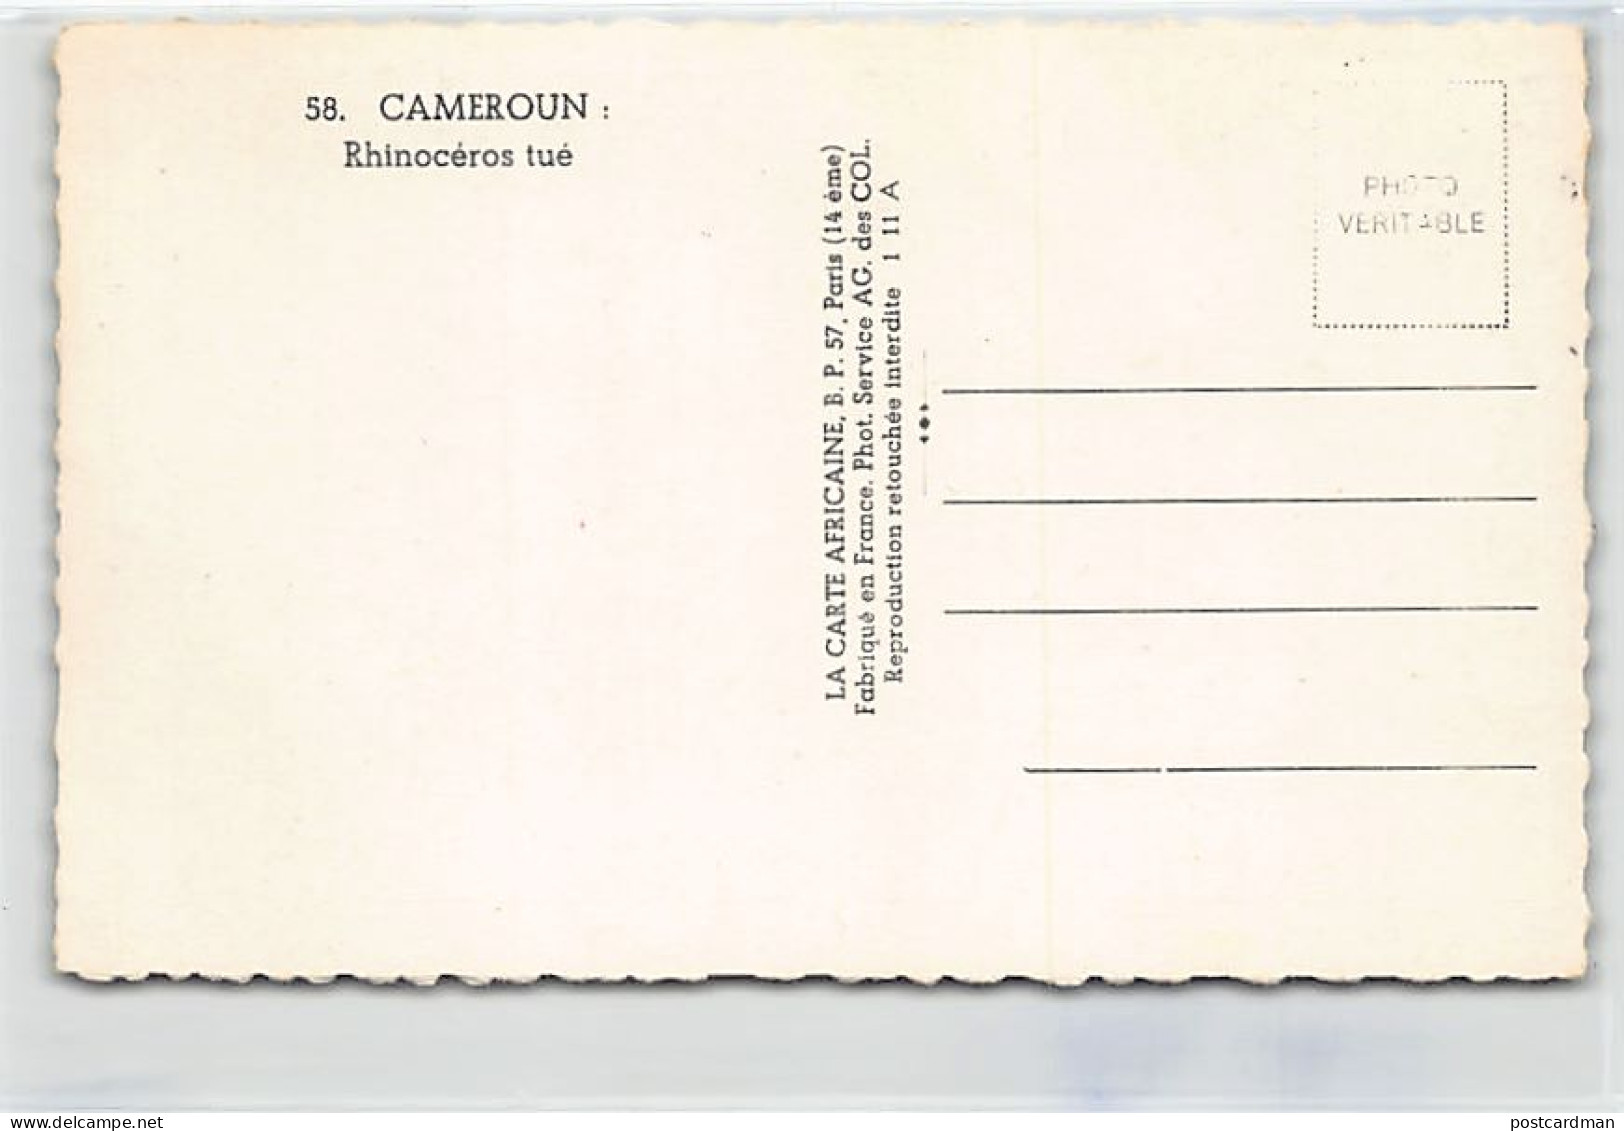 Cameroun - Rhinocéros Tué - Ed. La Carte Africaine 58 - Cameroon